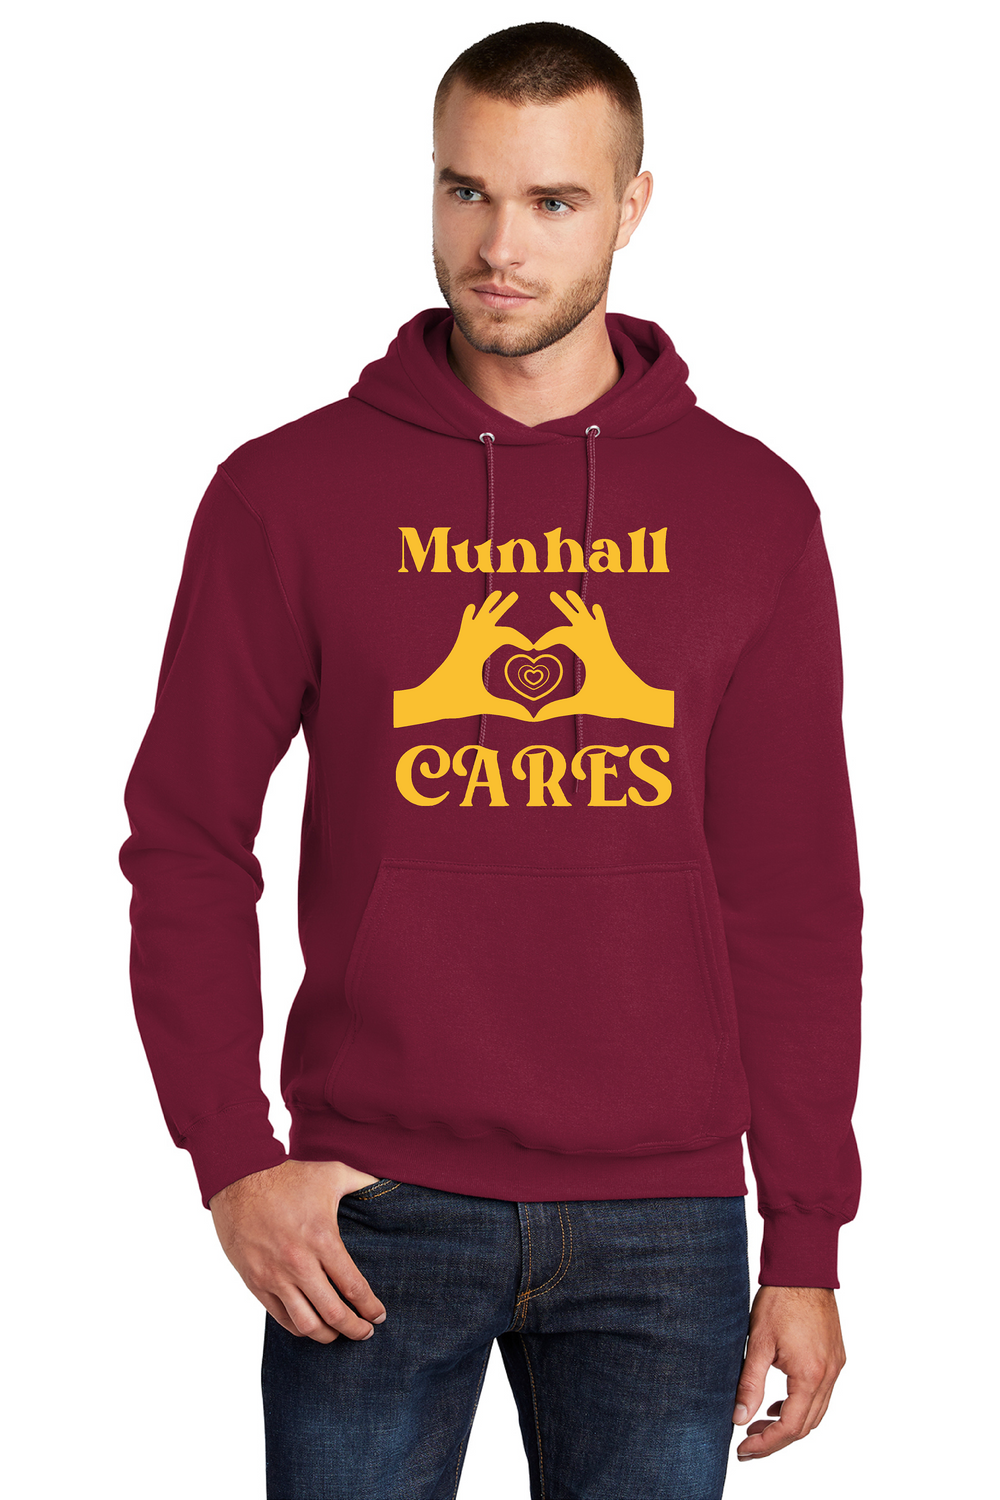 Munhall Cares Hoodie Sm-4XL